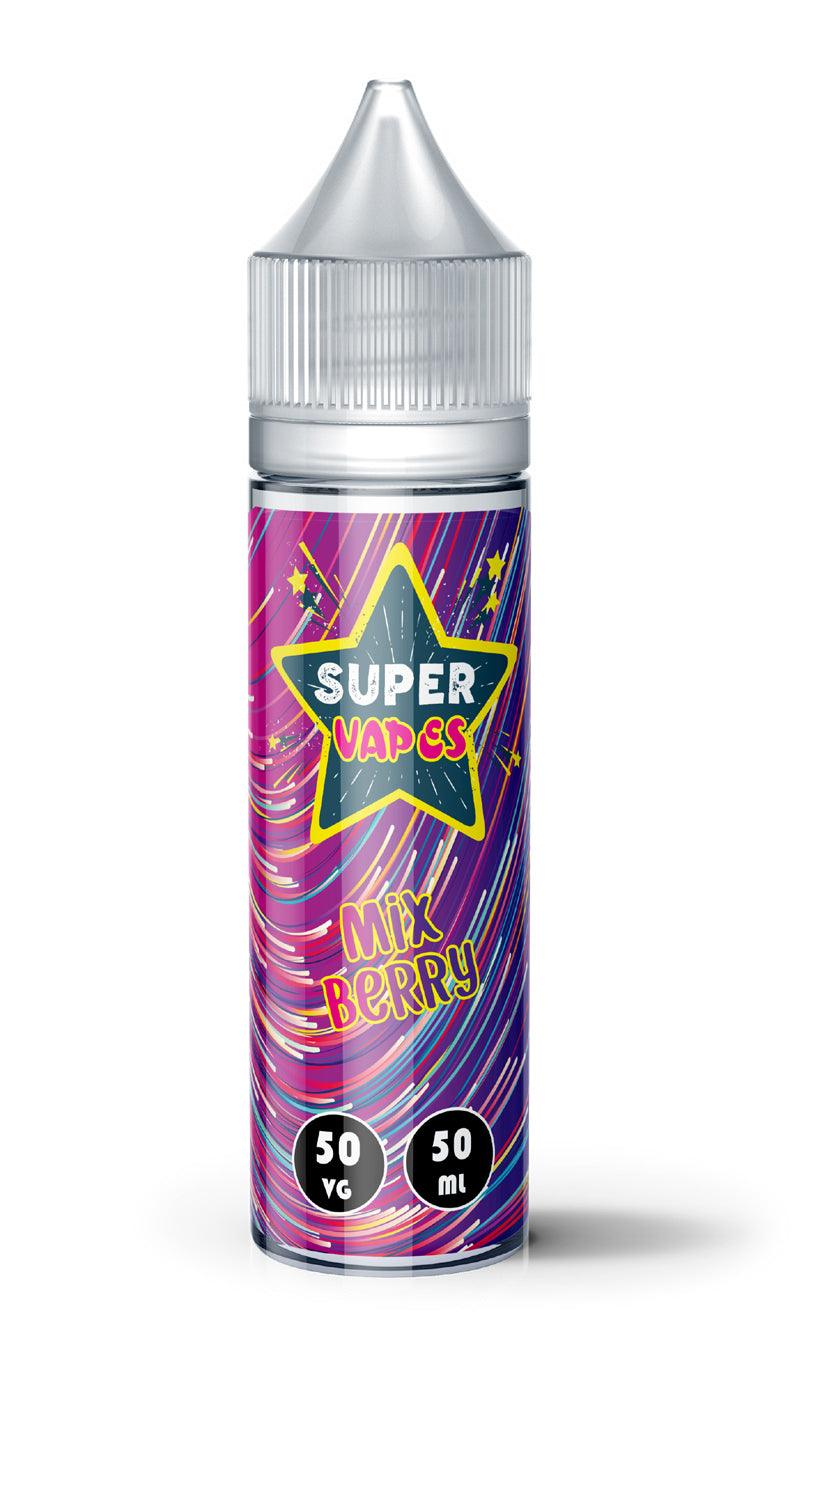 Mix Berry 50ml Shortfill by Super Vapes - Diamond Mist E-Liquid